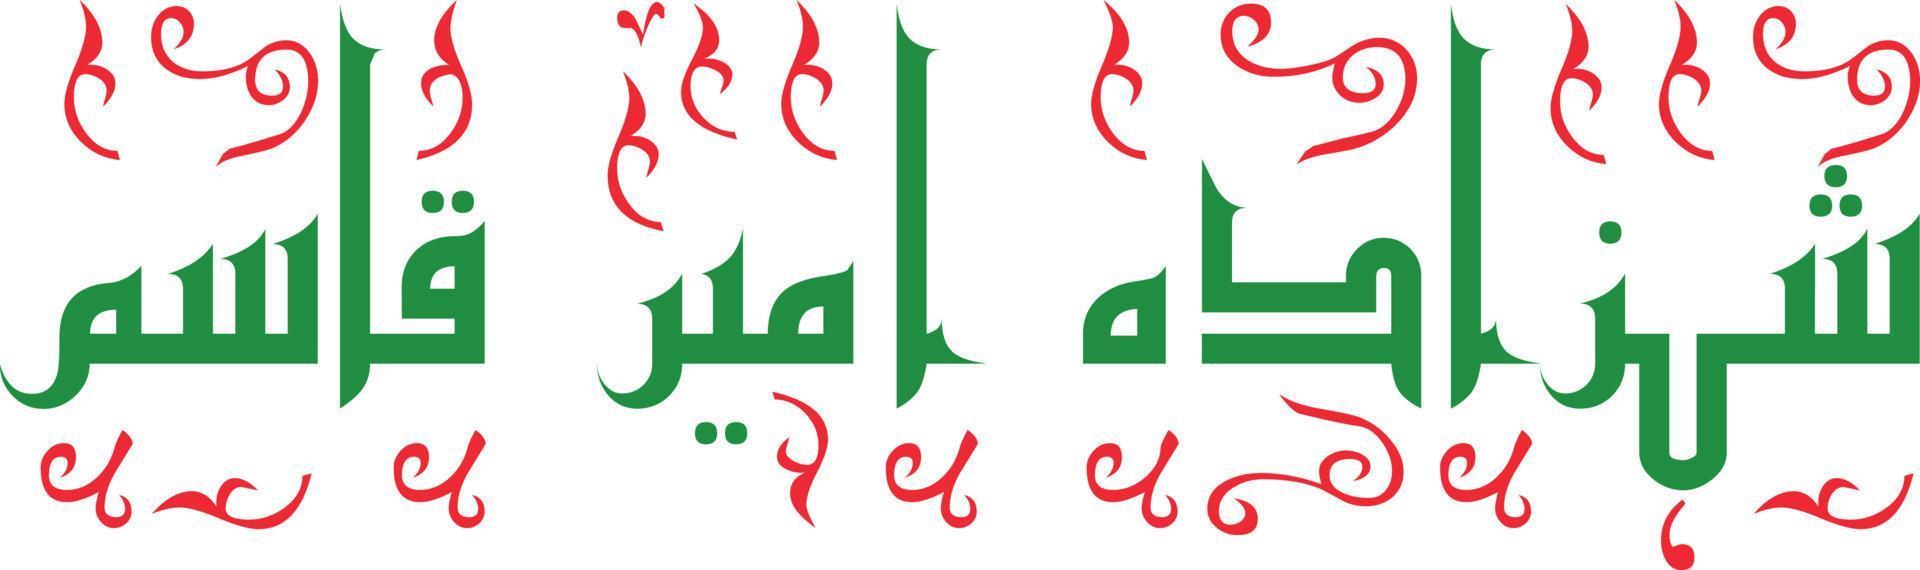 shazada più qasim islamico urdu calligrafia gratuito vettore